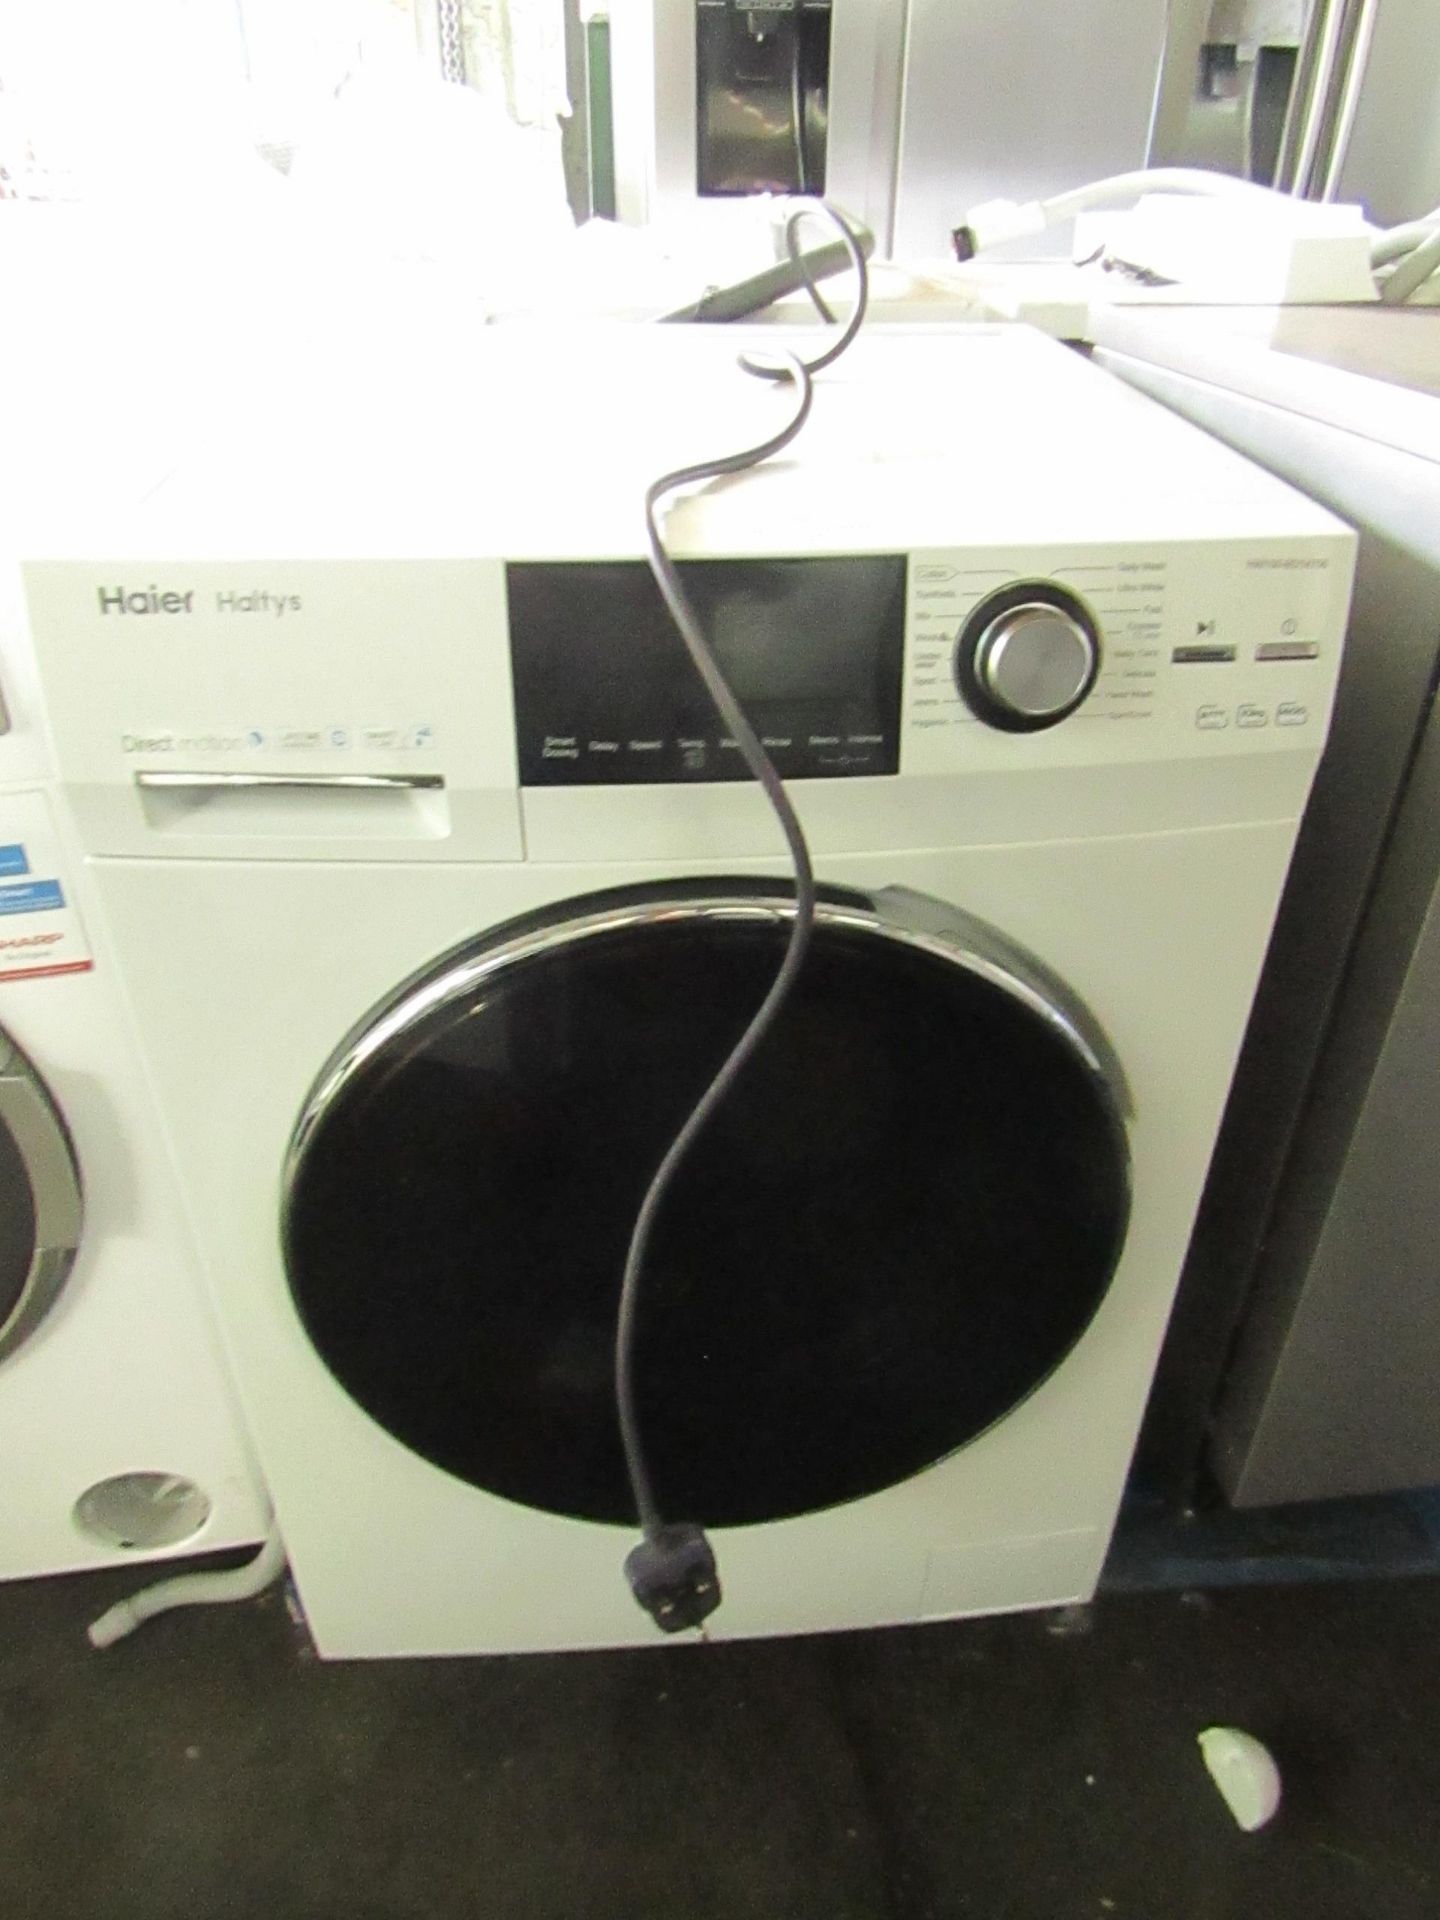 Haier - Haltys HW100-BD14756 10KG Washing Machine - Powers On, However E4 Error Code.